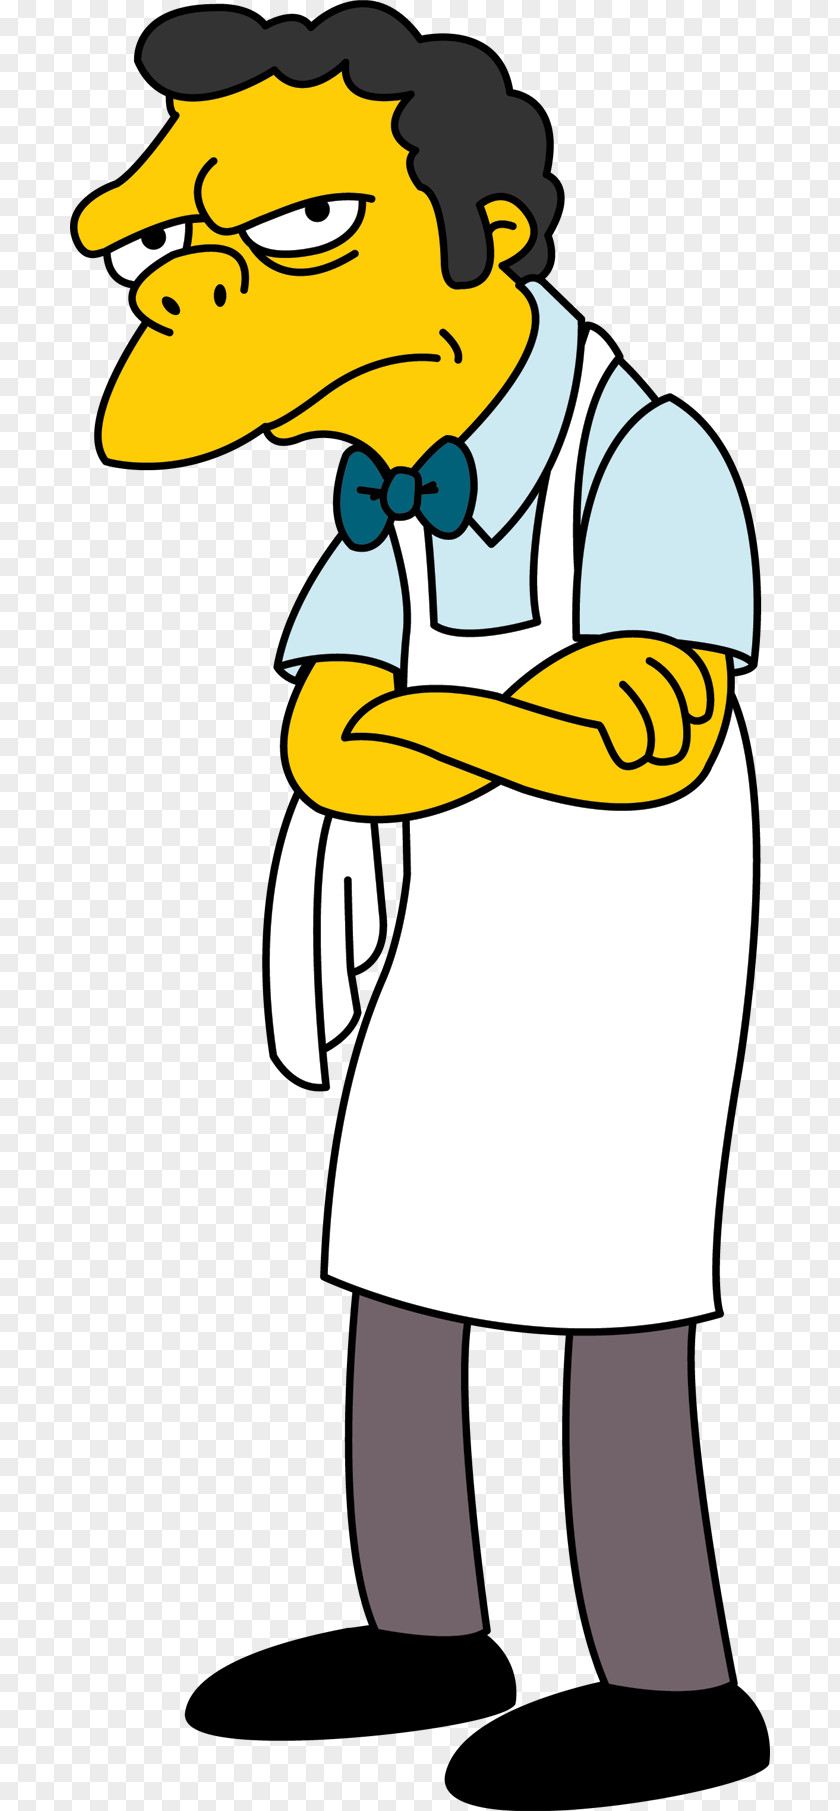 Bart Simpson Moe Szyslak Barney Gumble Homer Carl Carlson PNG